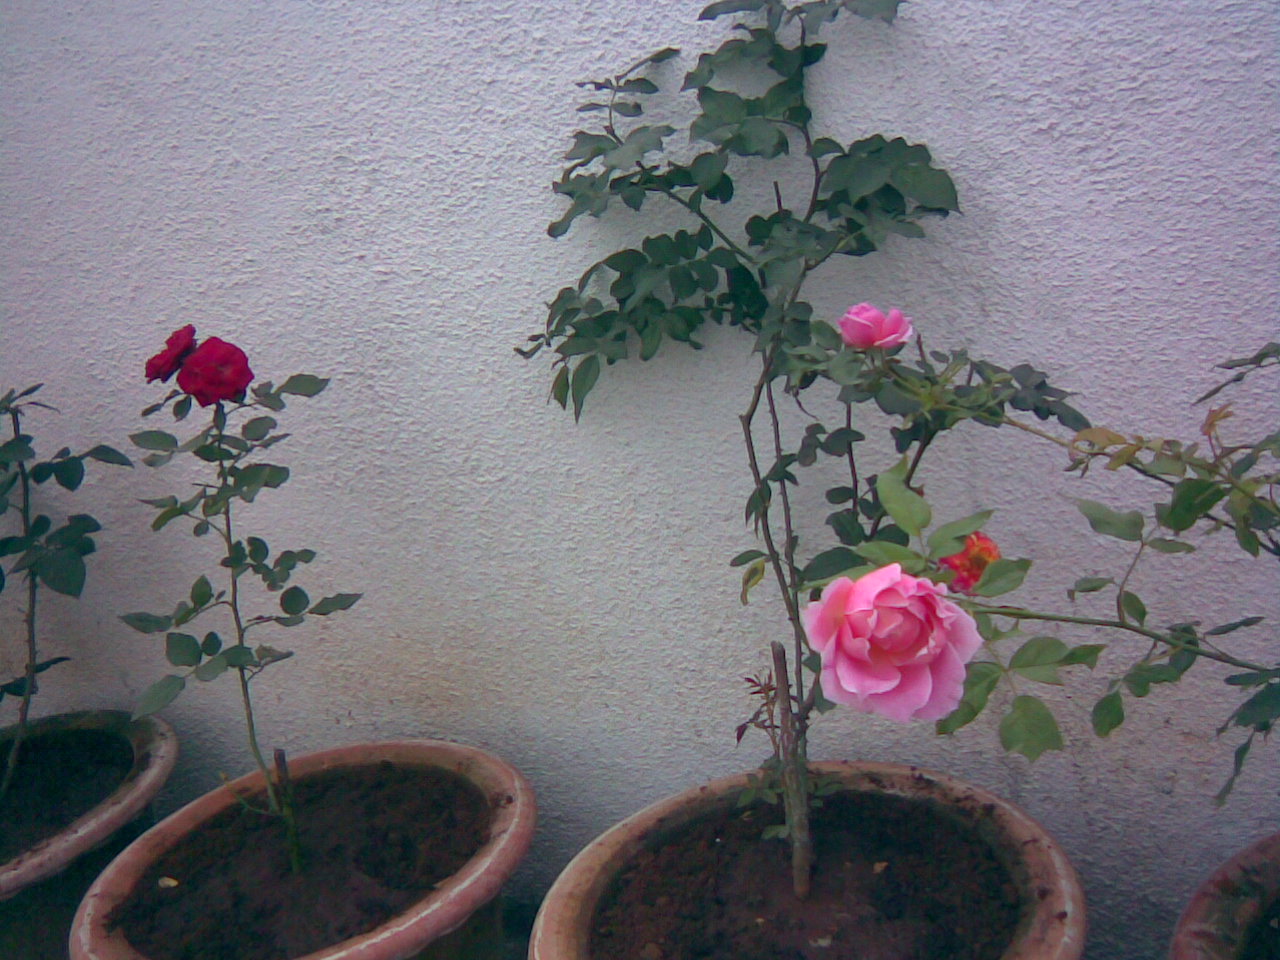 https://blogger.googleusercontent.com/img/b/R29vZ2xl/AVvXsEiSiUA3ew_1MzKFckju4lH9ihJJwoGwS_S6RlchY0nVxh2Cwb0MApNujc4FKMMi8VmRGkrWySjIFnYdgrMpohyphenhyphen3x2Q0MeVMBiuo2eRVDyOpt1obAU5l6INodMX2p0EzjxZEYkmPHROLi_r3/s1600/pink+red+roses+plant+in+my+garden+ree+pictures+of+roses%252C+rose+clipart+and+wallpaper.+Free+rose+greeting+cards.jpg